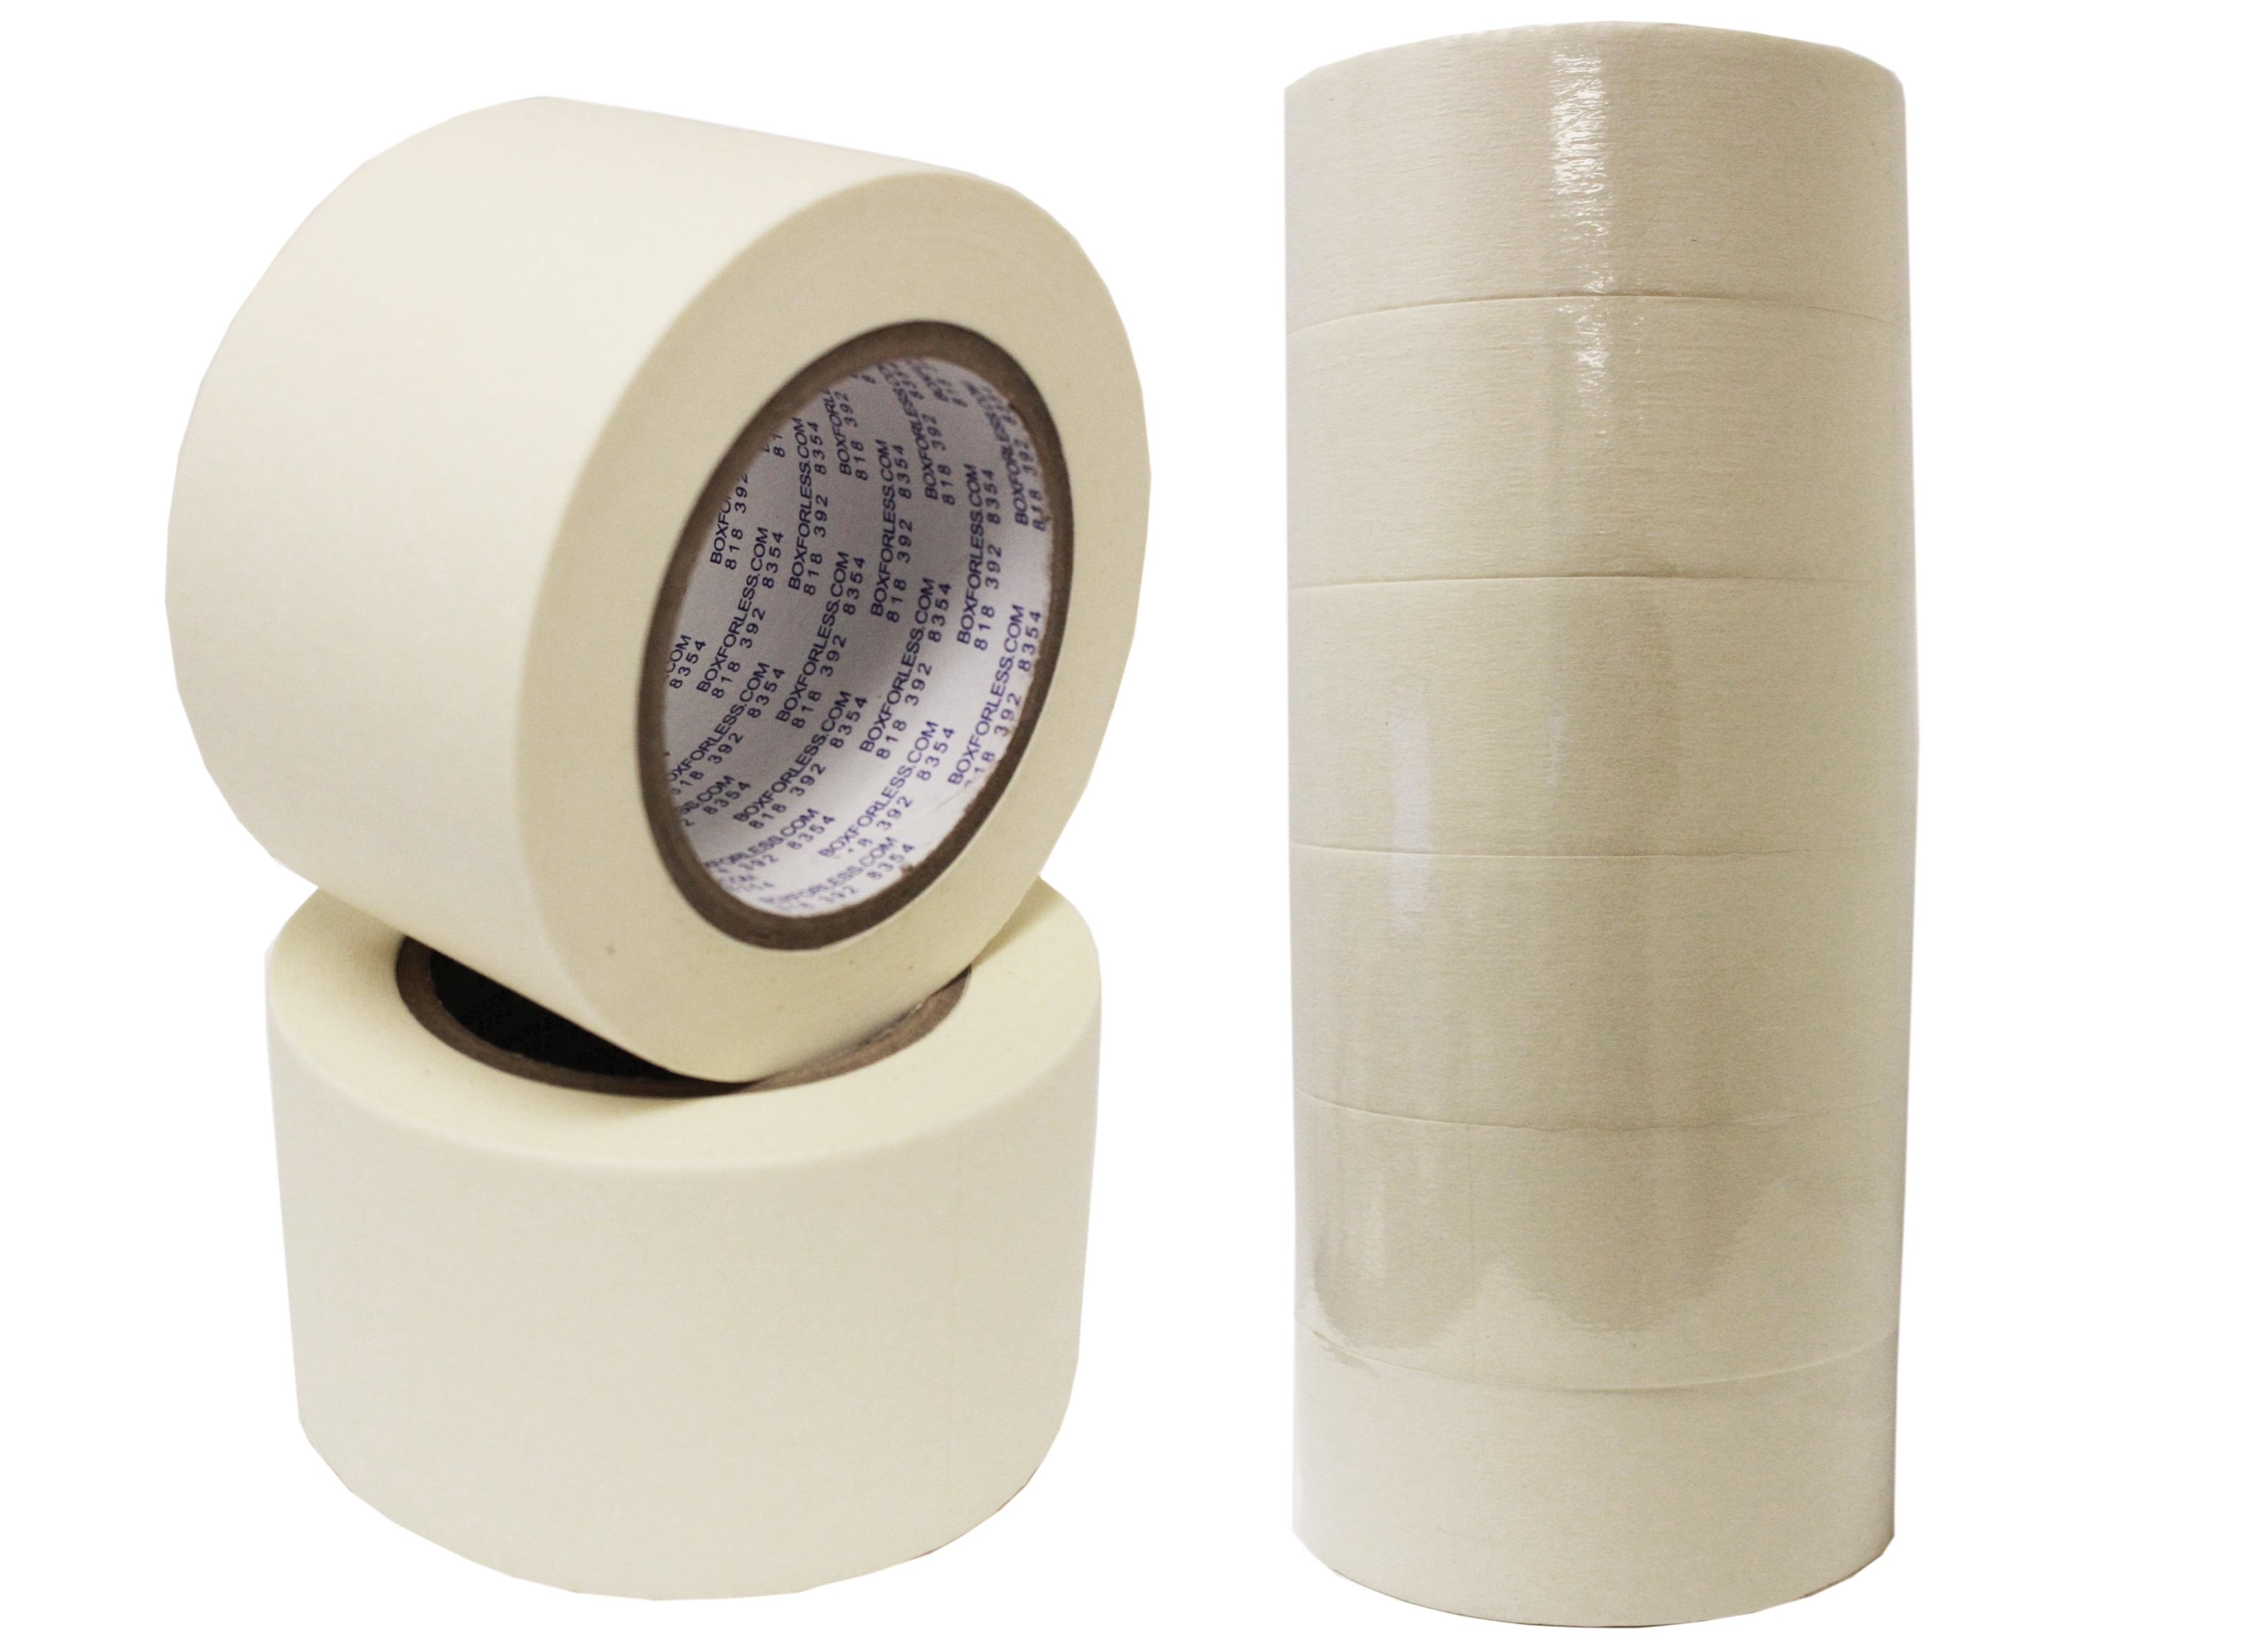 Ivory General Purpose Utility Grade Thick Masking Tape - 2" x 60 Yards  - 24 Rls